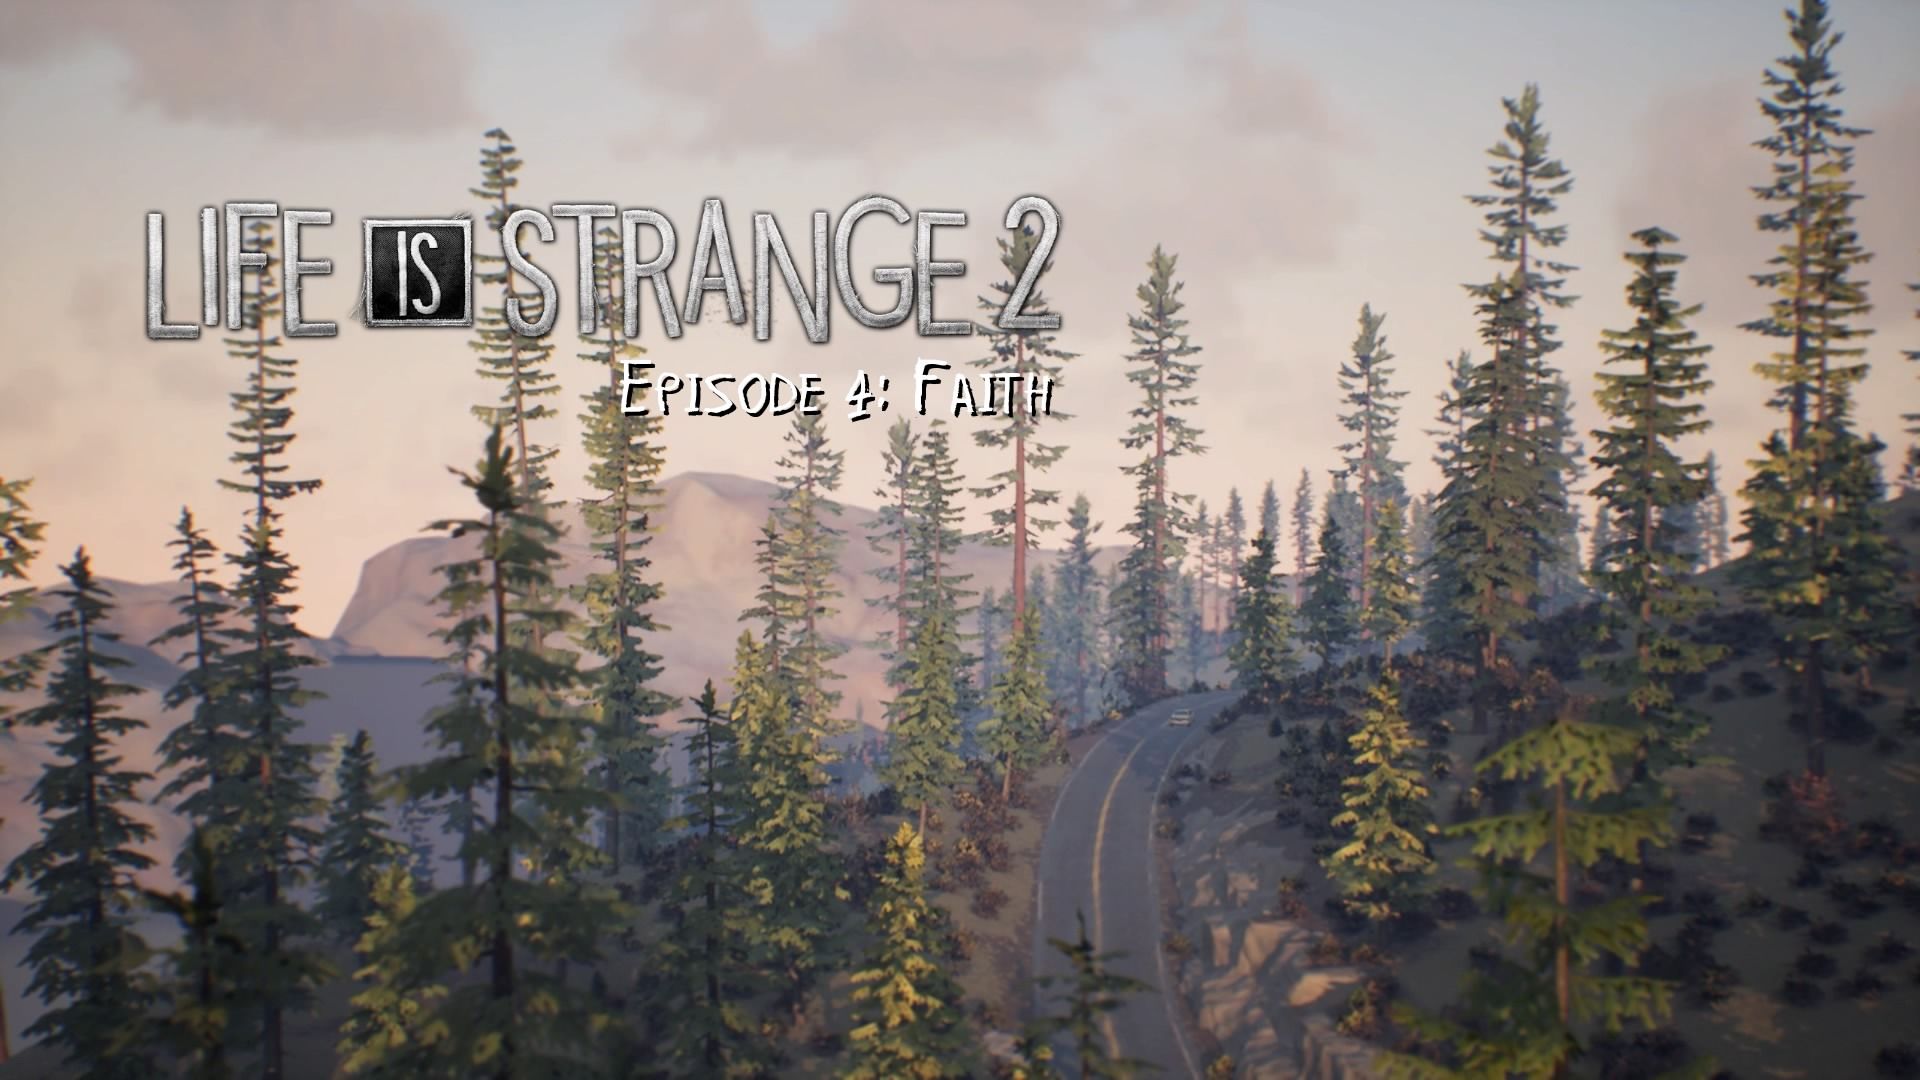 Hd Life Is Strange 2 Episode 4 Faith Wallpaper Life Is